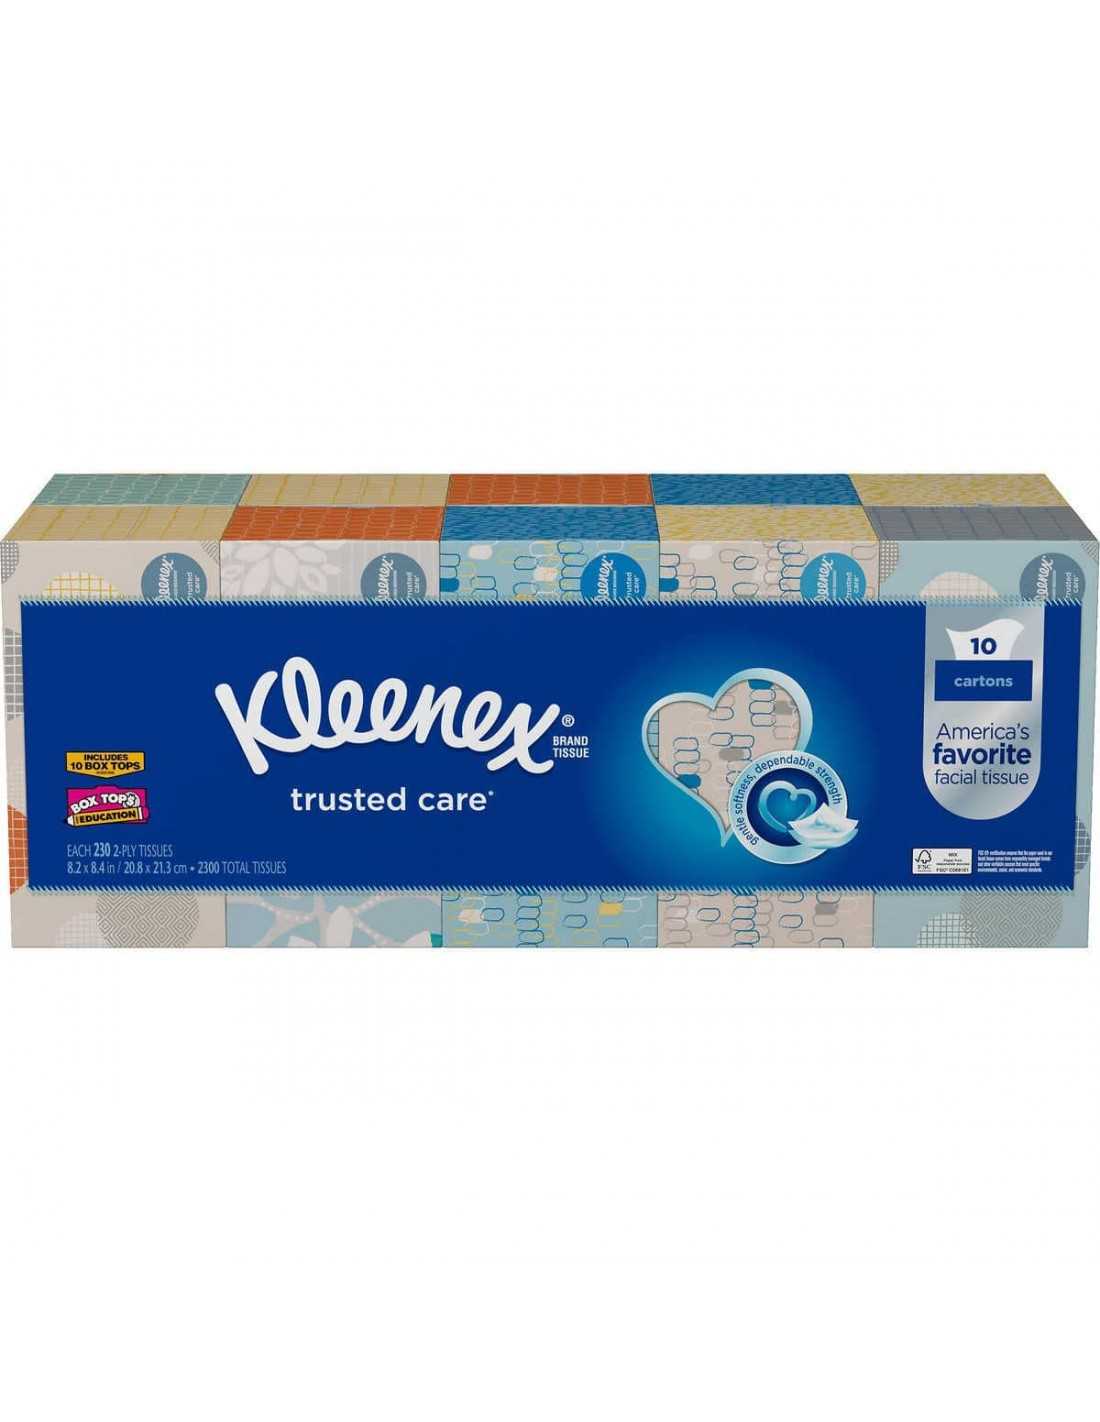 Pañuelos Kleenex de doble capa - Caja de 100 en